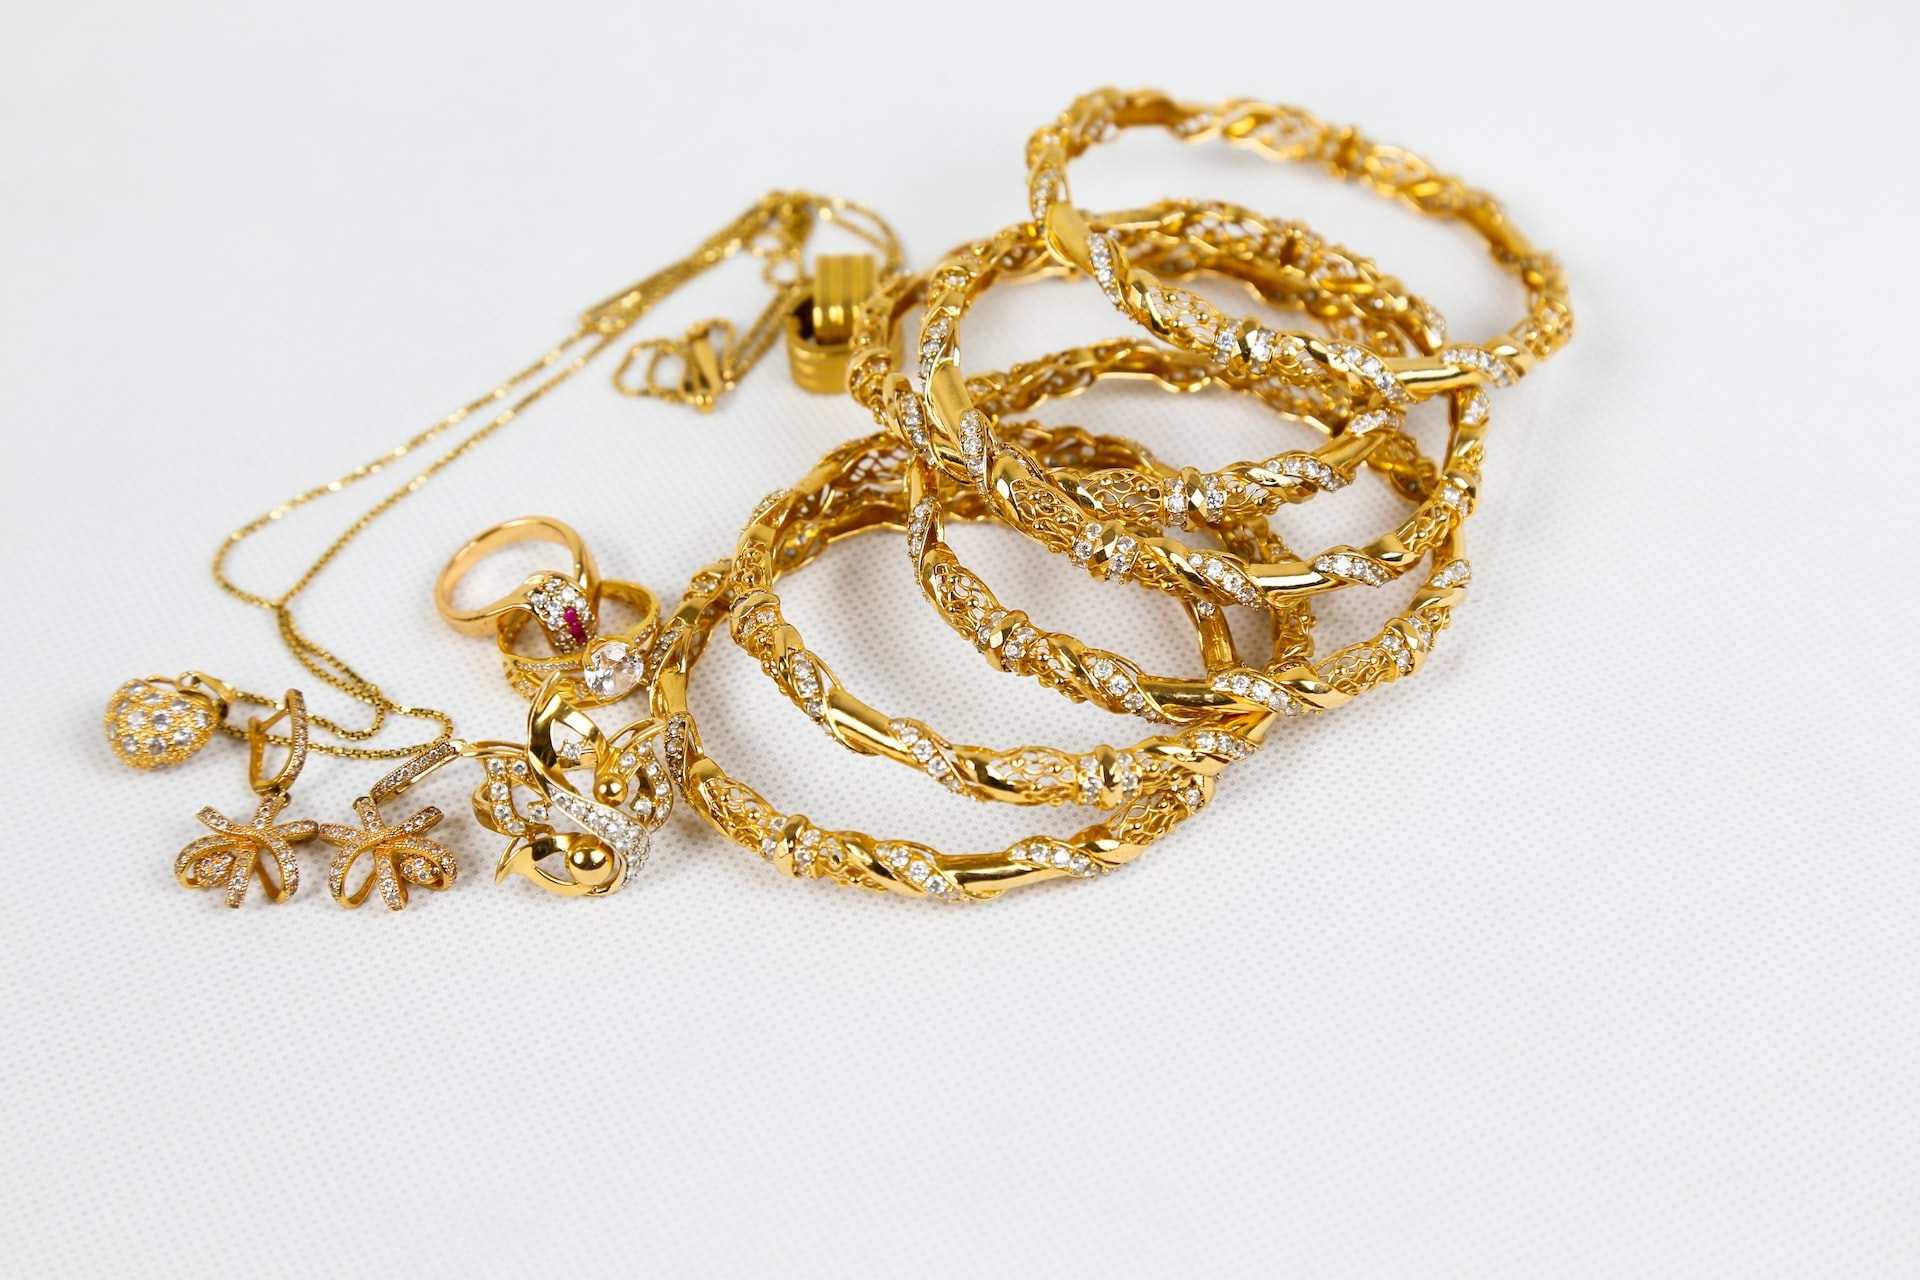 24K Gold Jewelry